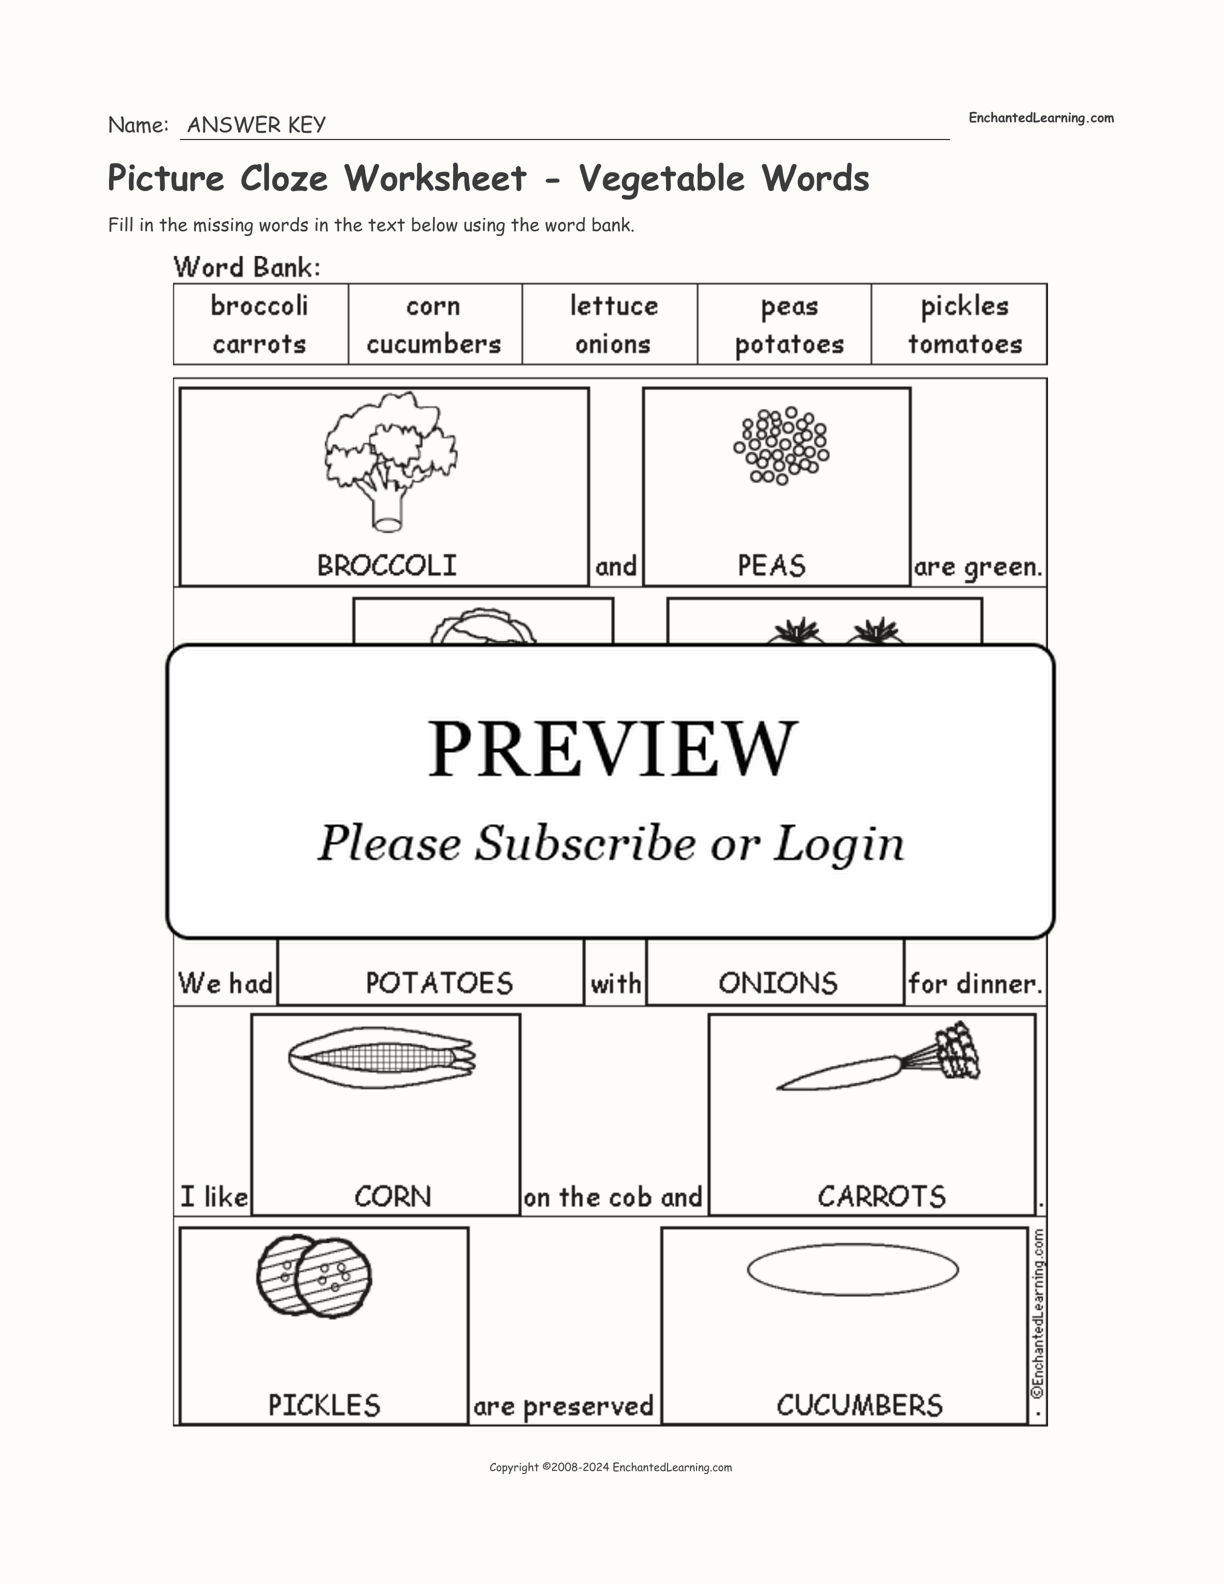 Picture Cloze Worksheet - Vegetable Words interactive worksheet page 2